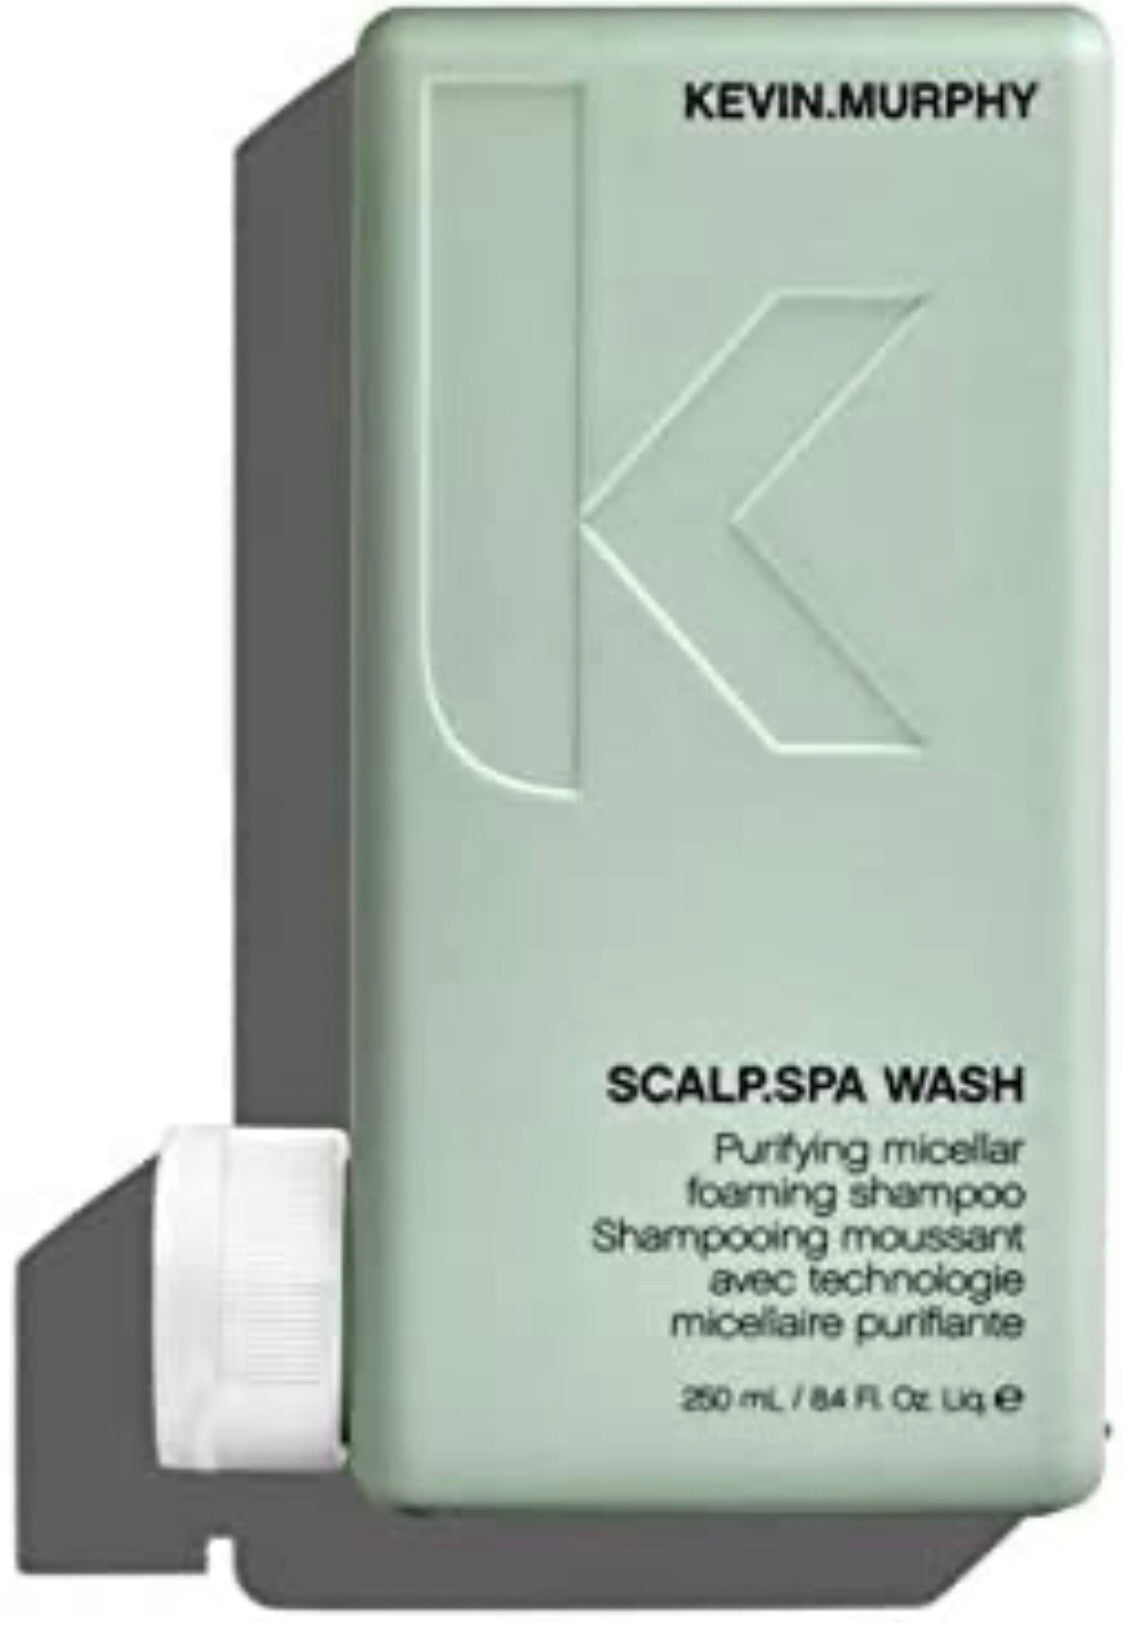 Kevin.Murphy - Scalp.SPA Wash  8.4 fl. oz. / 250 ml